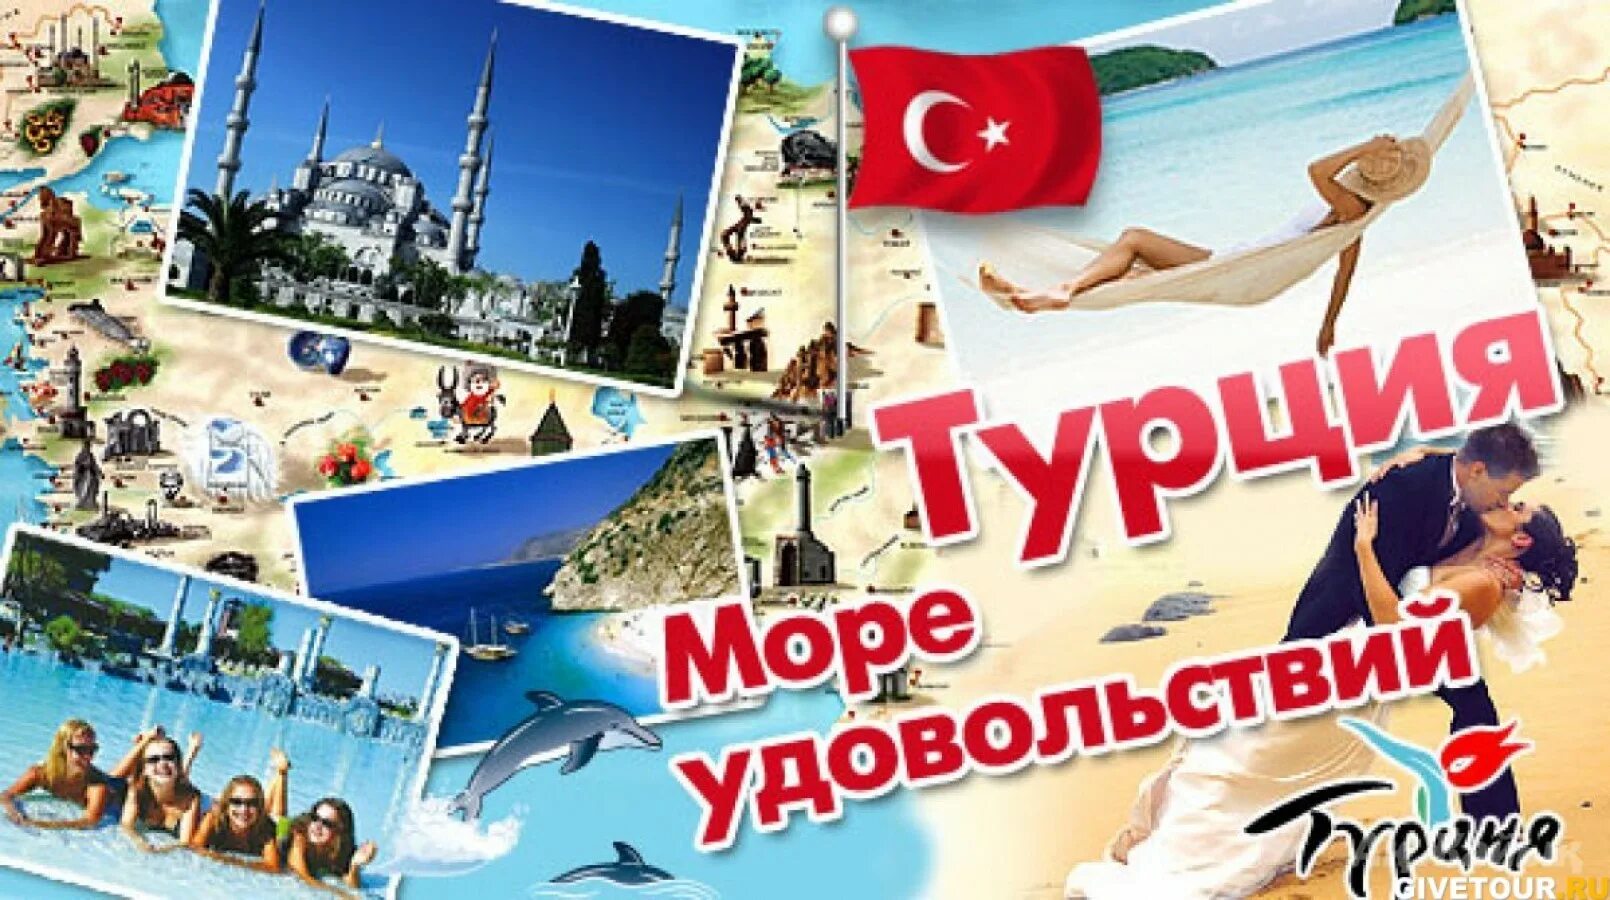 Реклама путешествия в Турцию. Турция туризм. Турция коллаж. Туризм Турция коллаж.